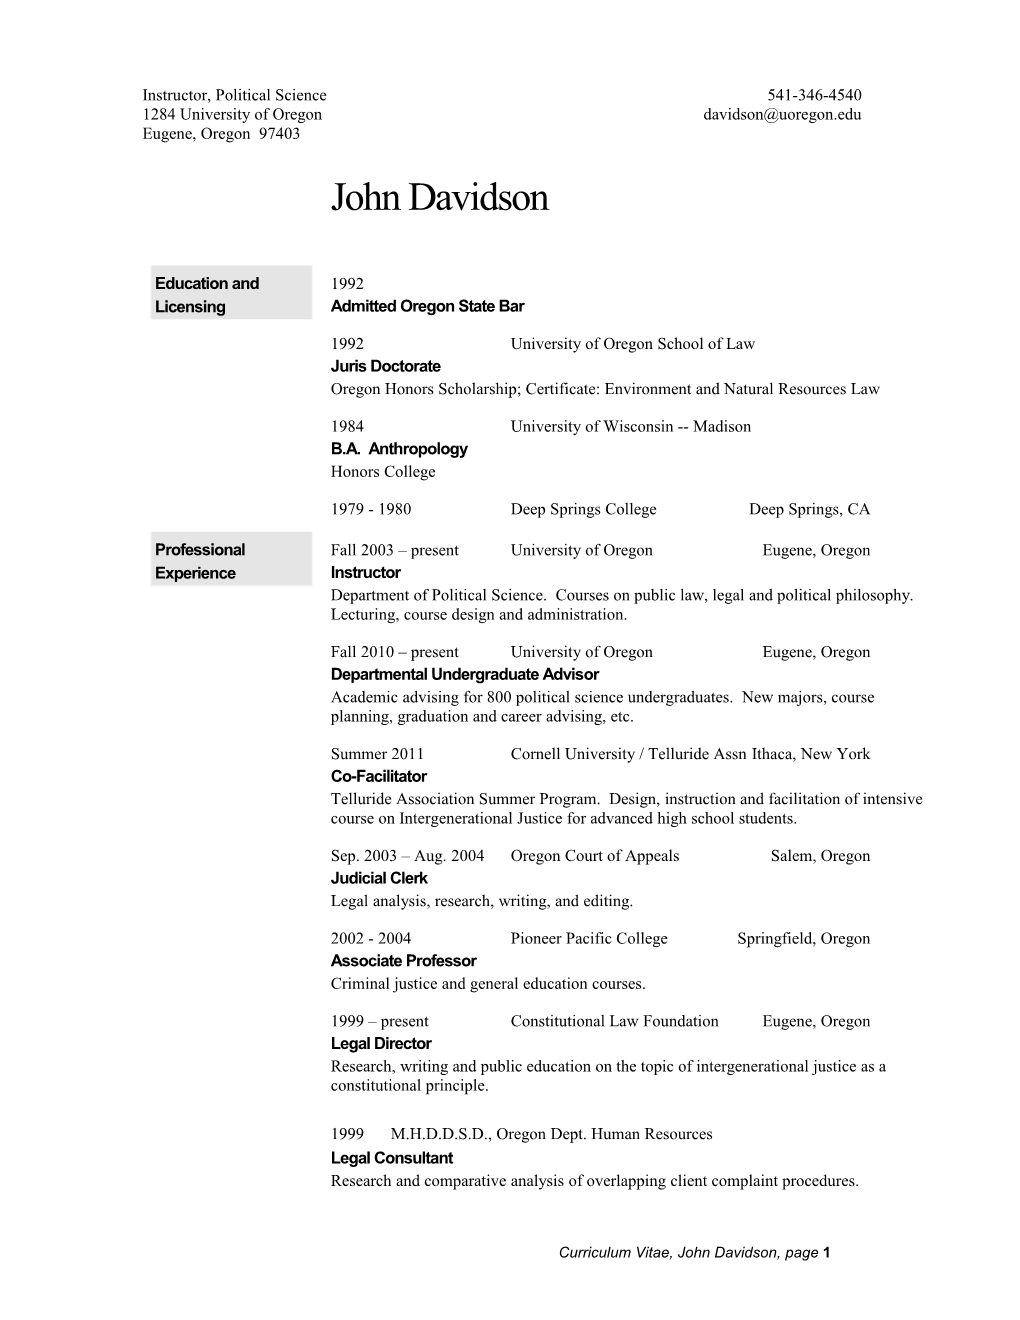 Curriculum Vitae, John Davidson, Page 6